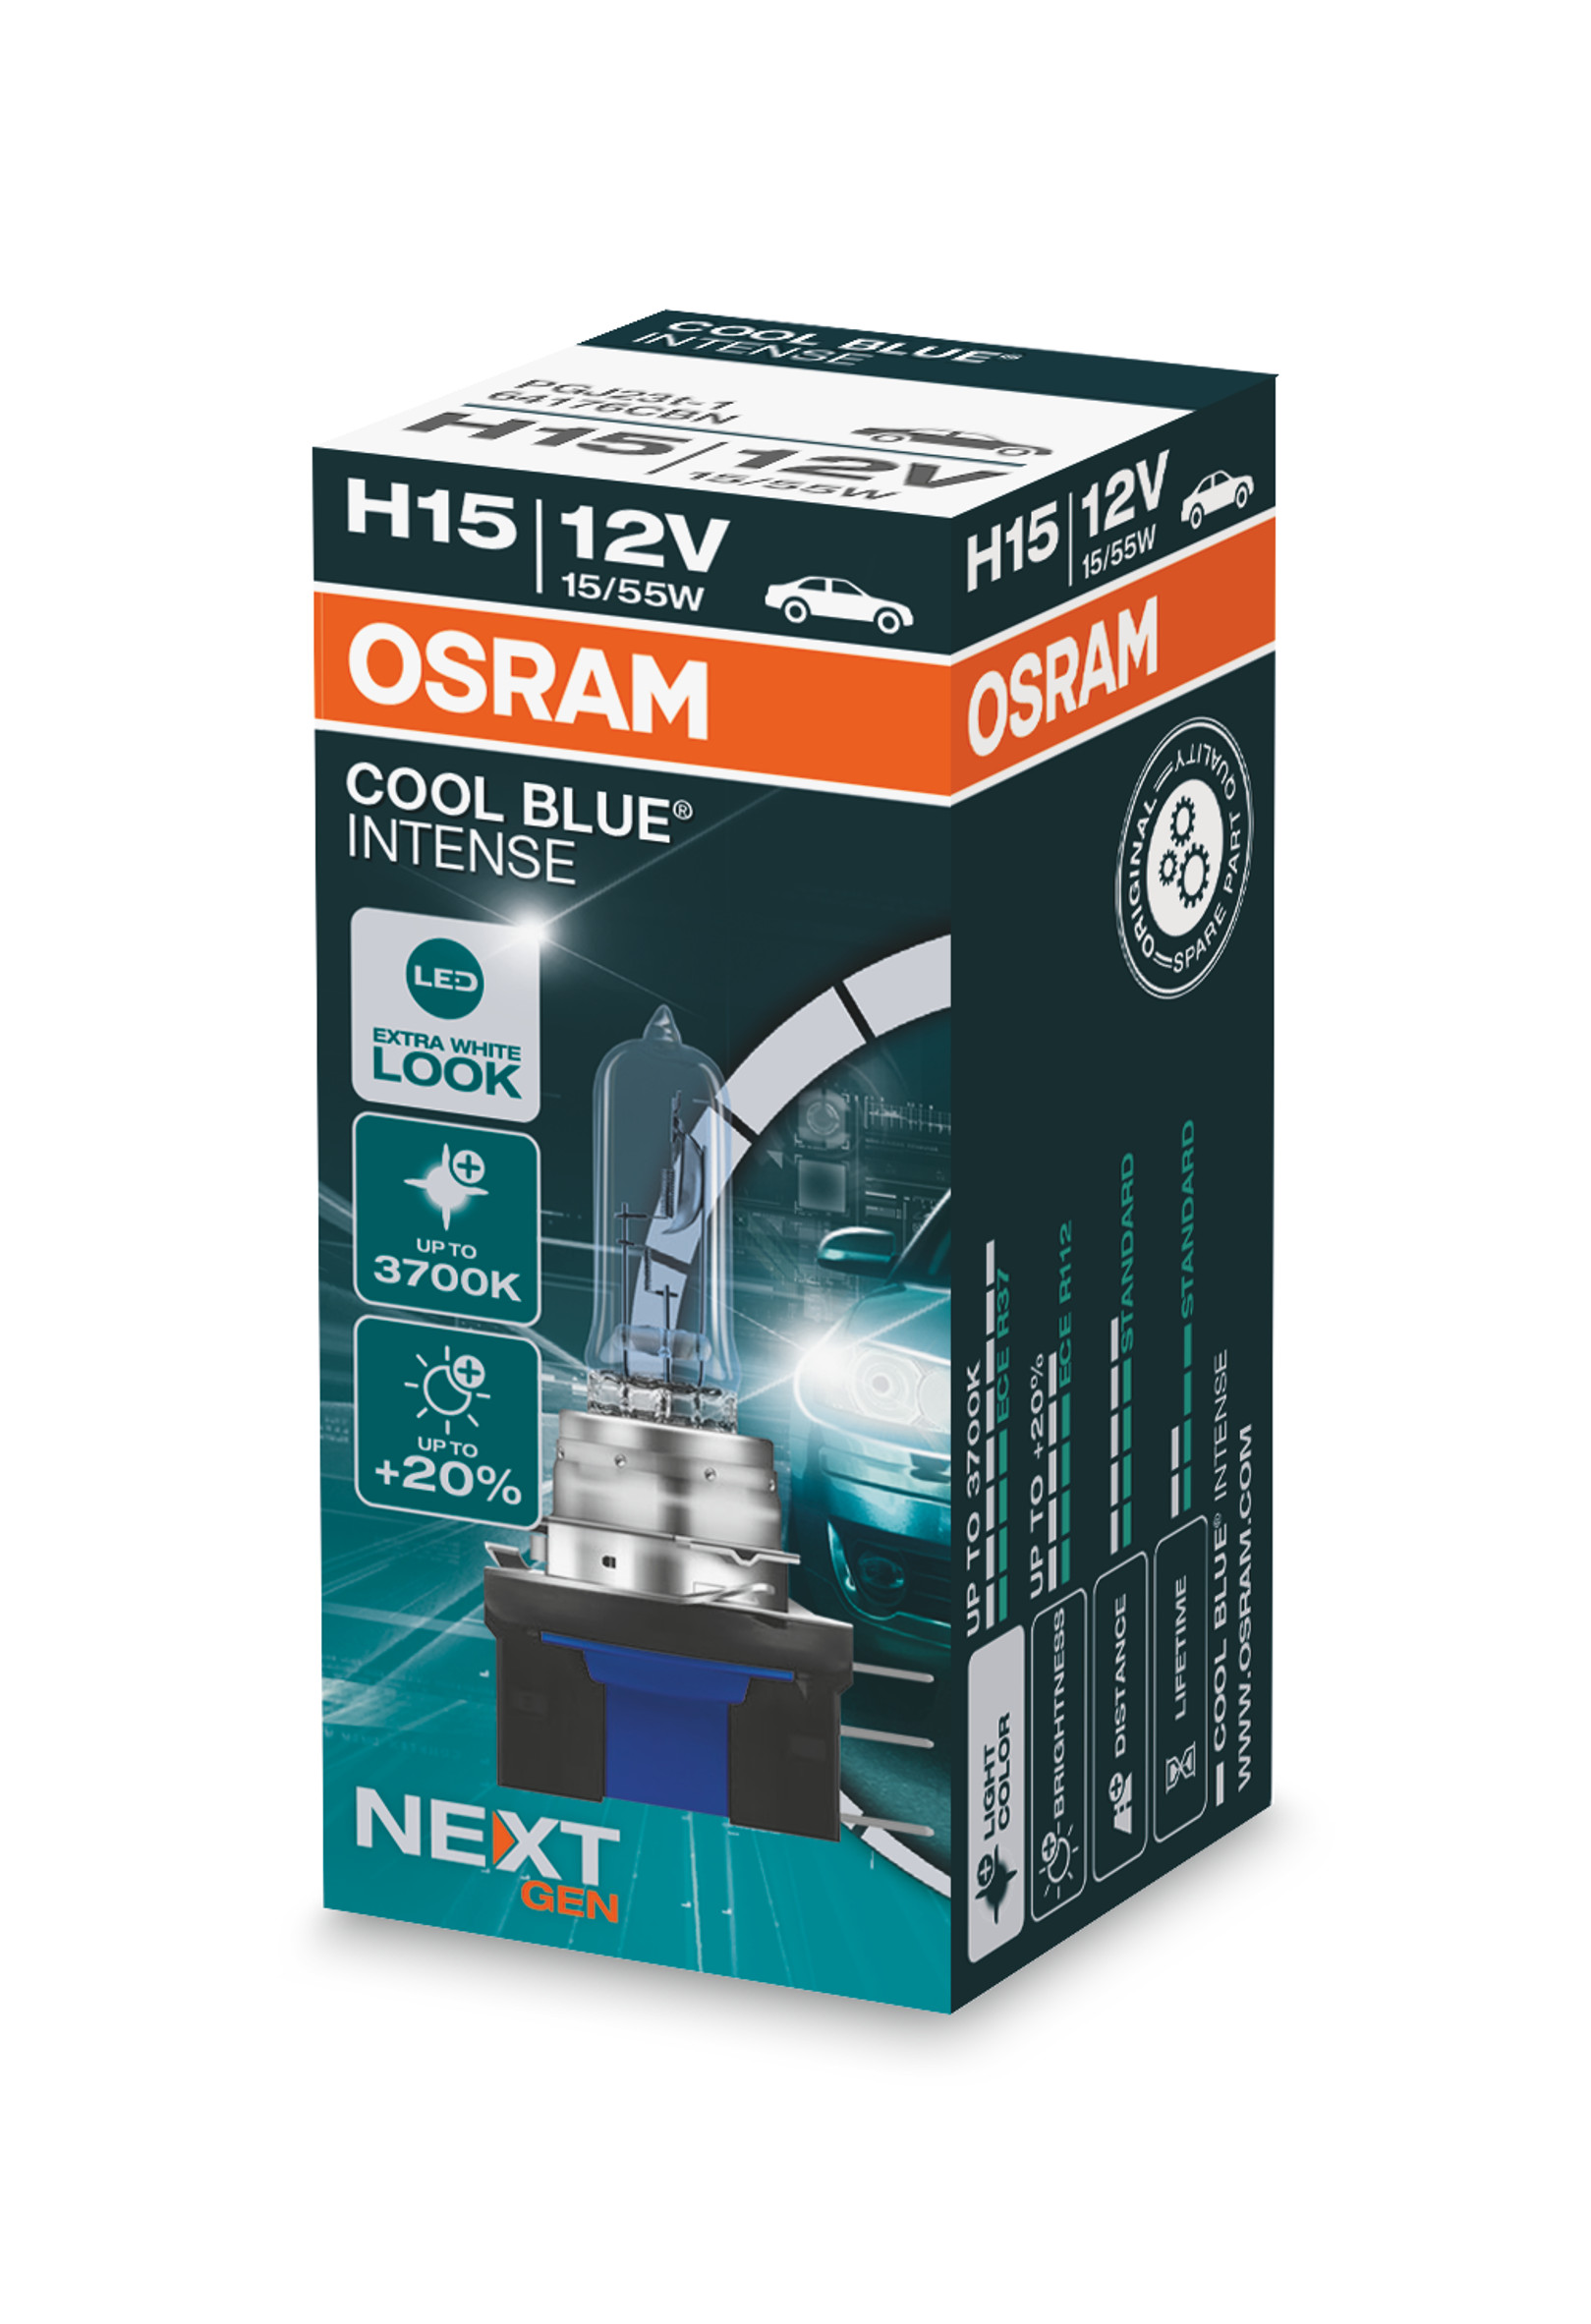 OSRAM Cool Blue Intense H7 55W